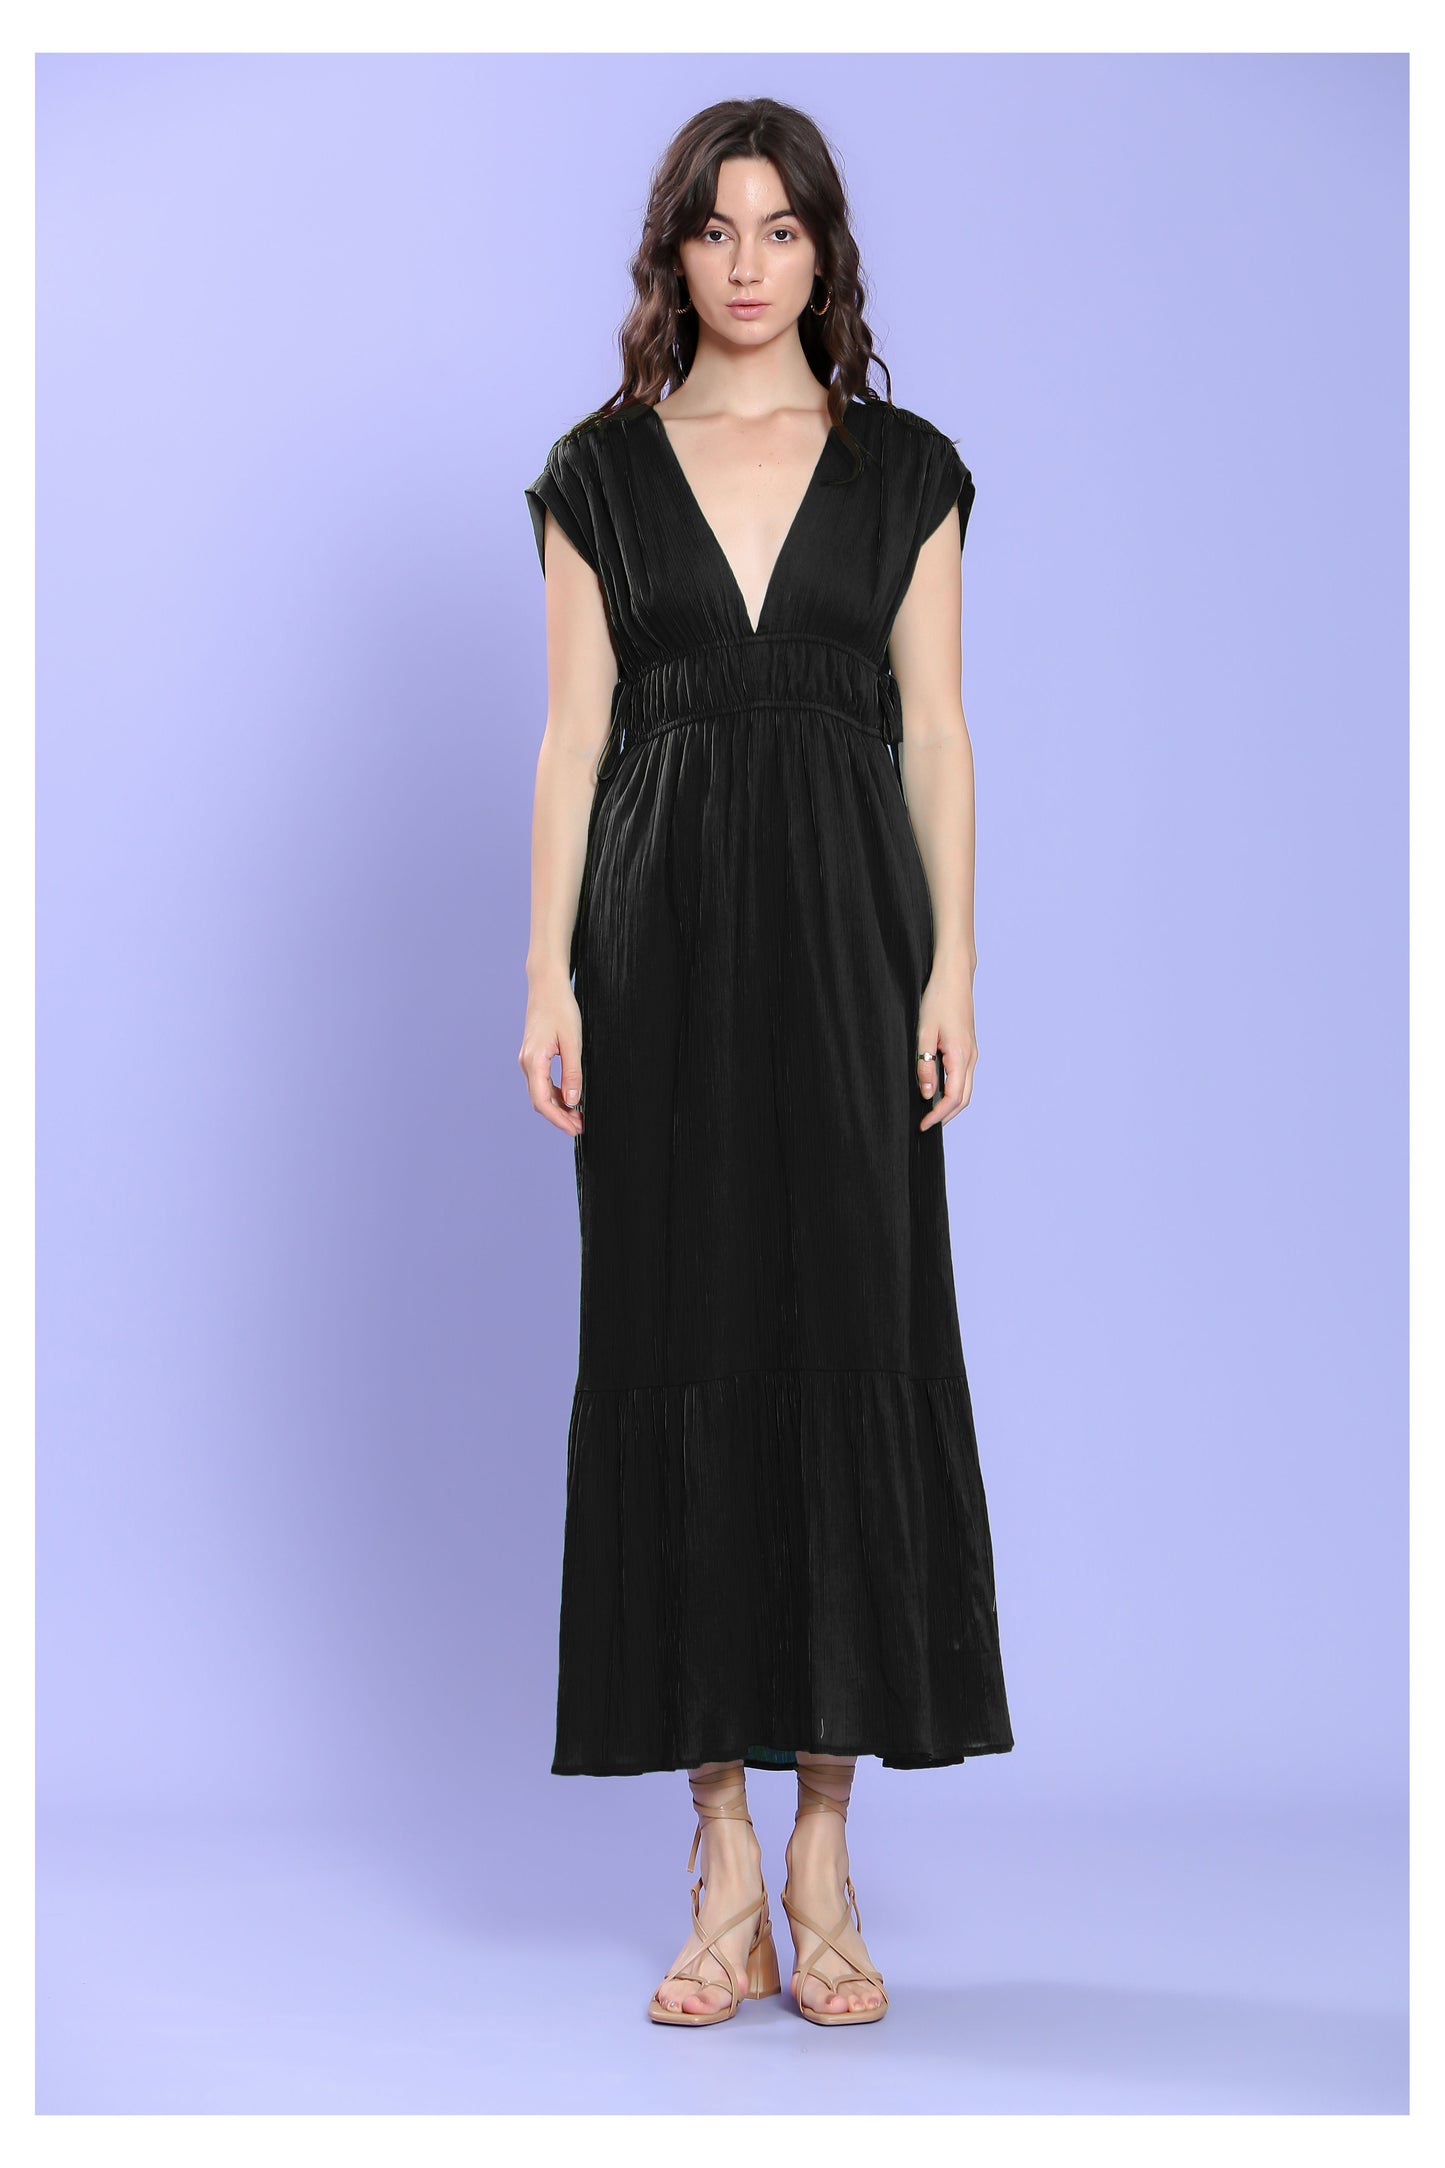 Sleeveless Maxi Dress in black by The Korner